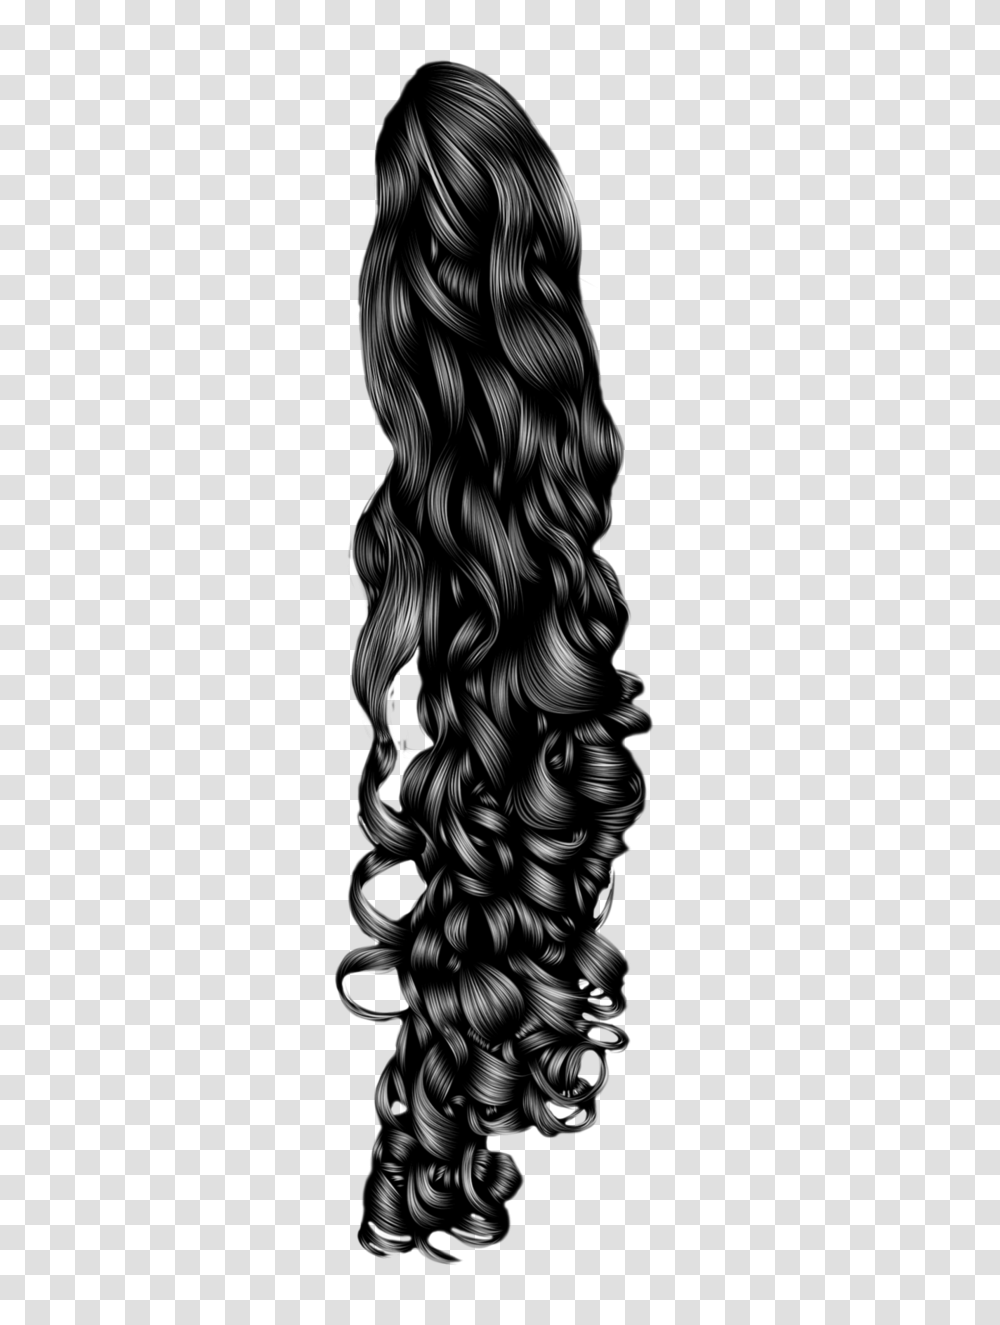 Hair Curls Image Arts, Photography, Person, Human, Black Hair Transparent Png